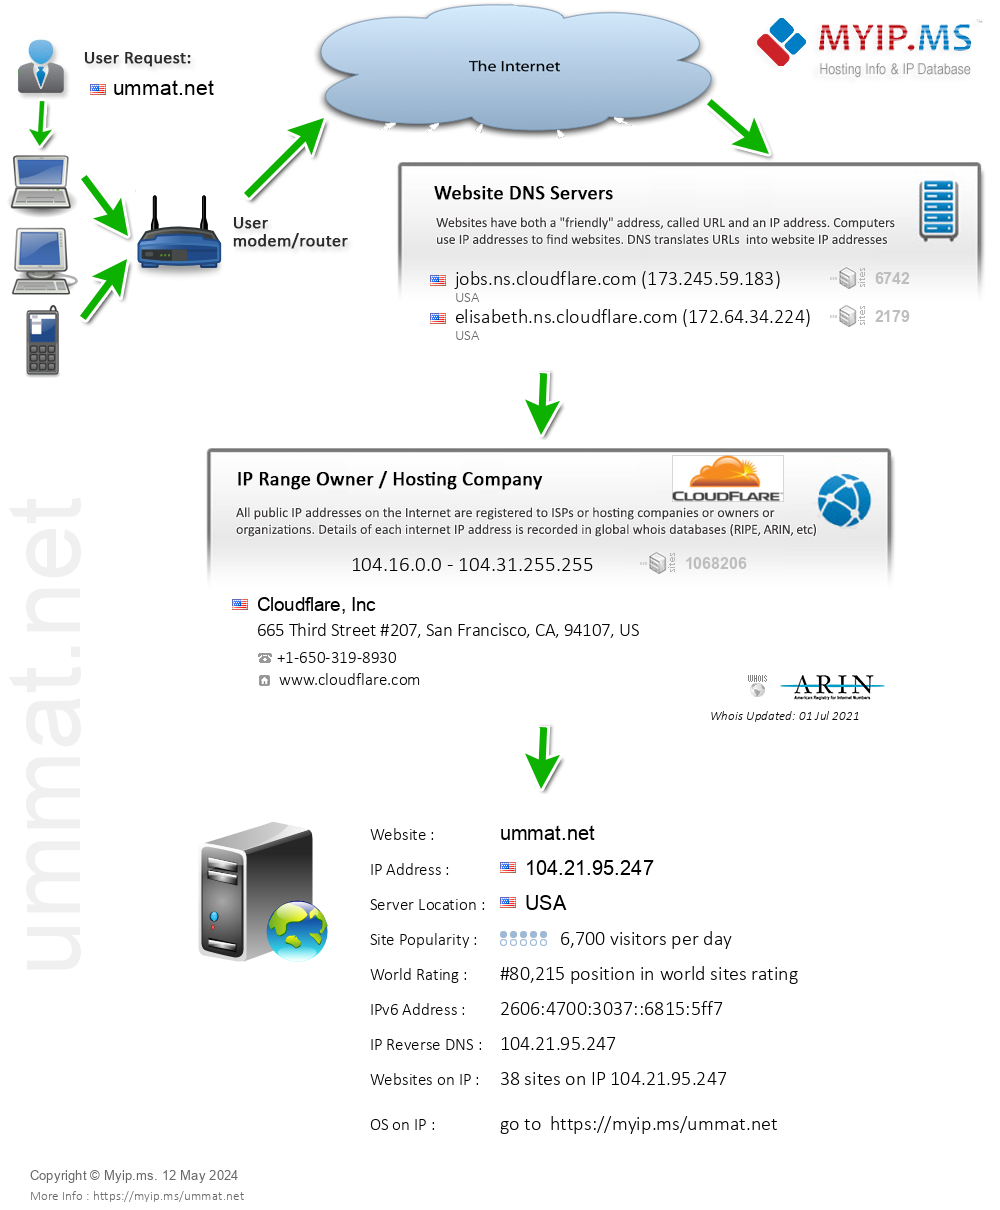 Ummat.net - Website Hosting Visual IP Diagram